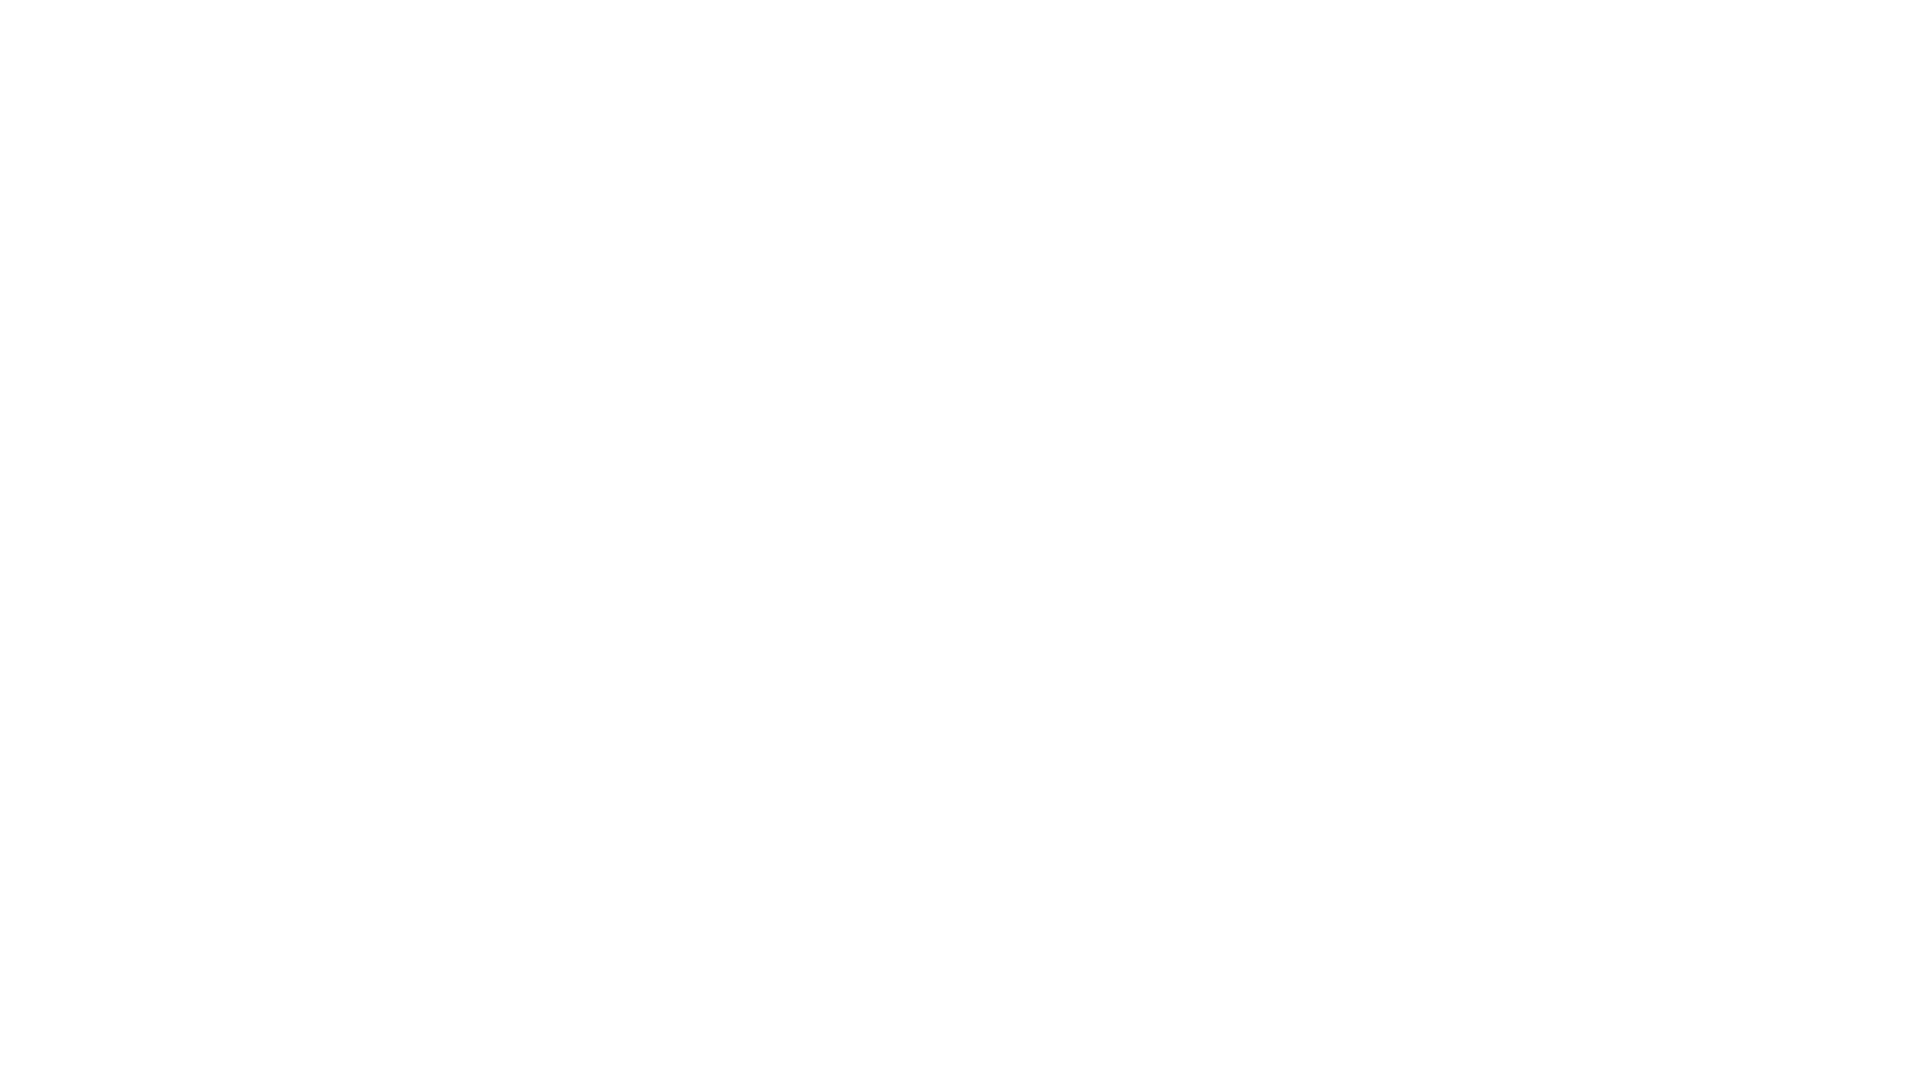 Threshold Church at Union Centre